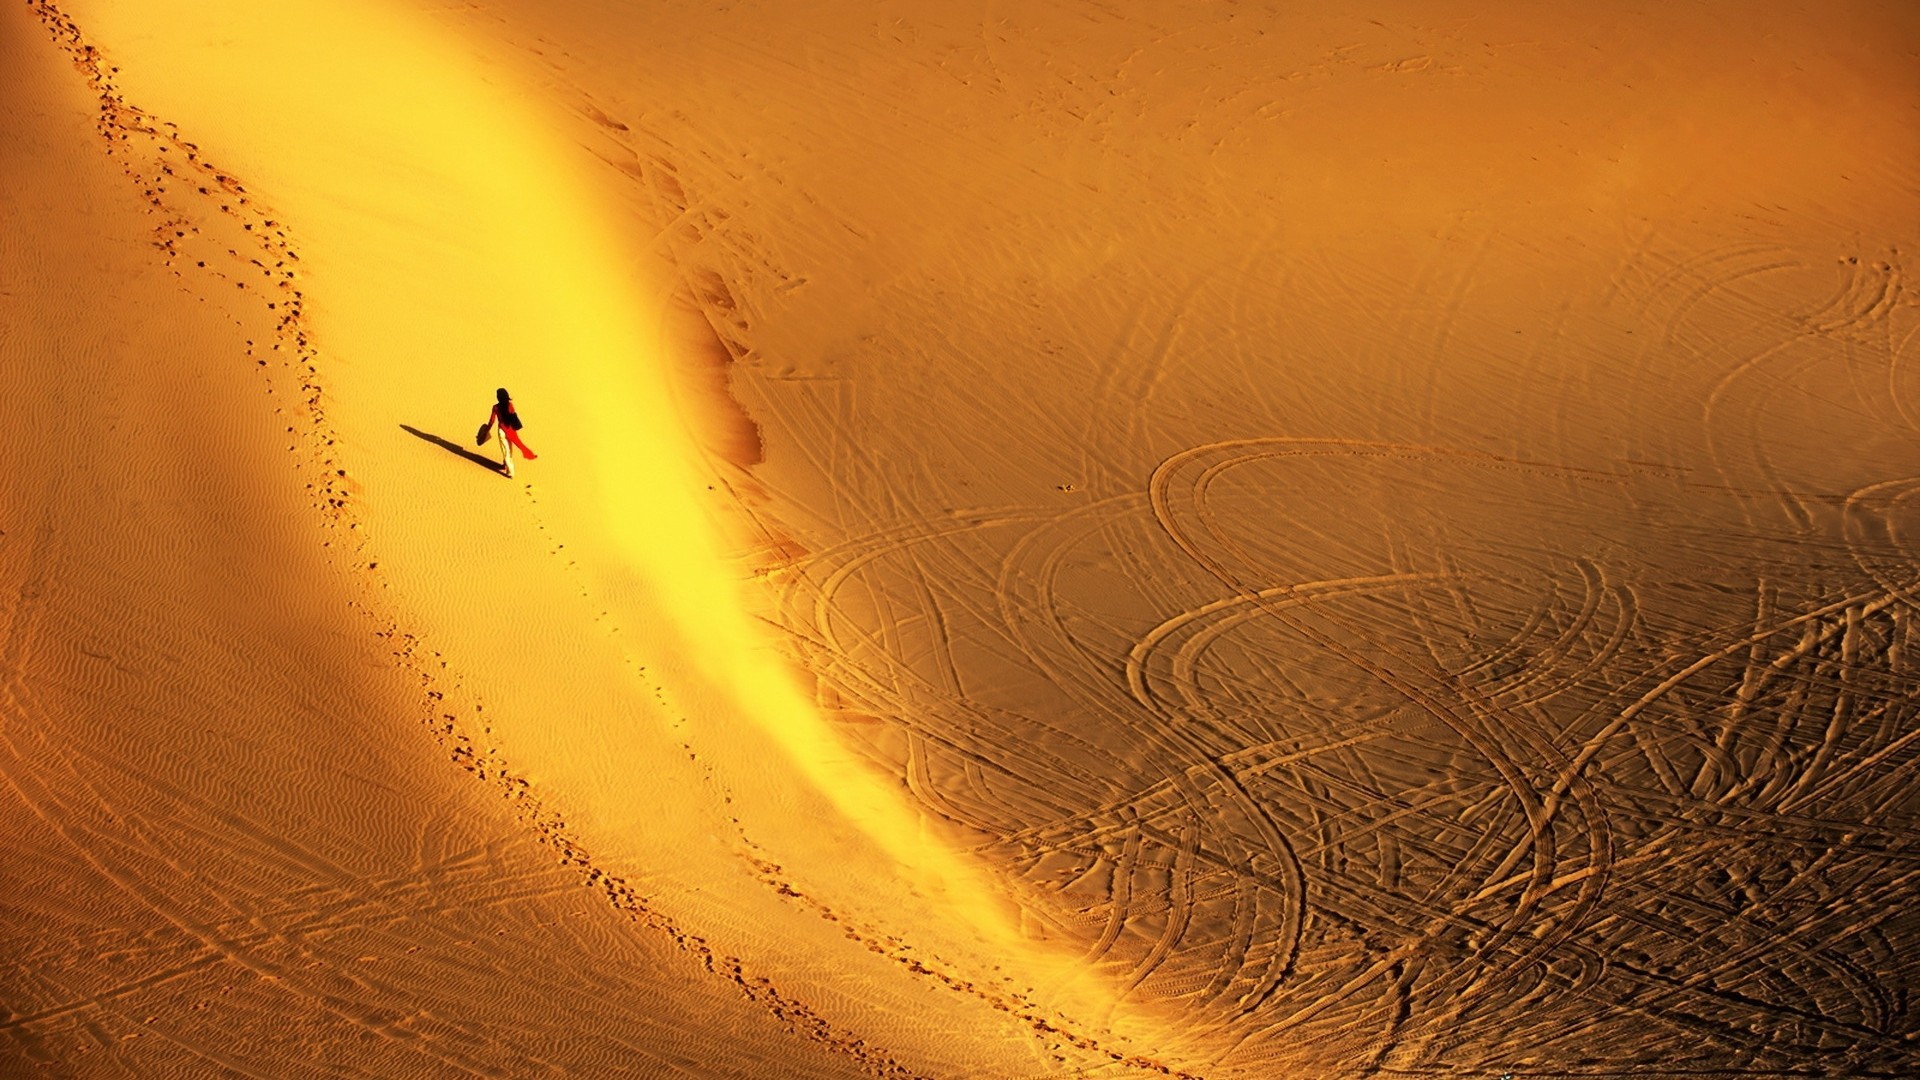 General 1920x1080 aerial view nature landscape desert sand women footprints sunlight shadow tire tracks yellow women outdoors walking